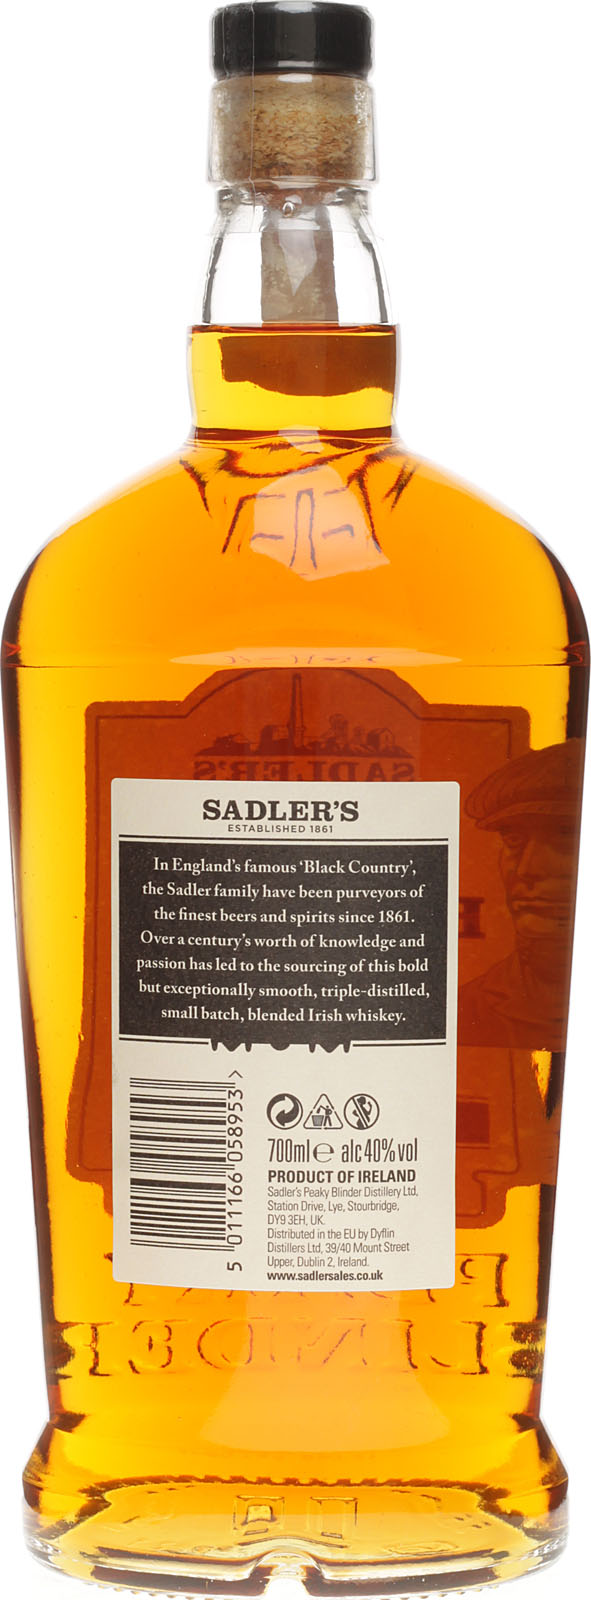 Peaky Blinder Irish Whisky Liter Shop % 0,7 im 40 Vol